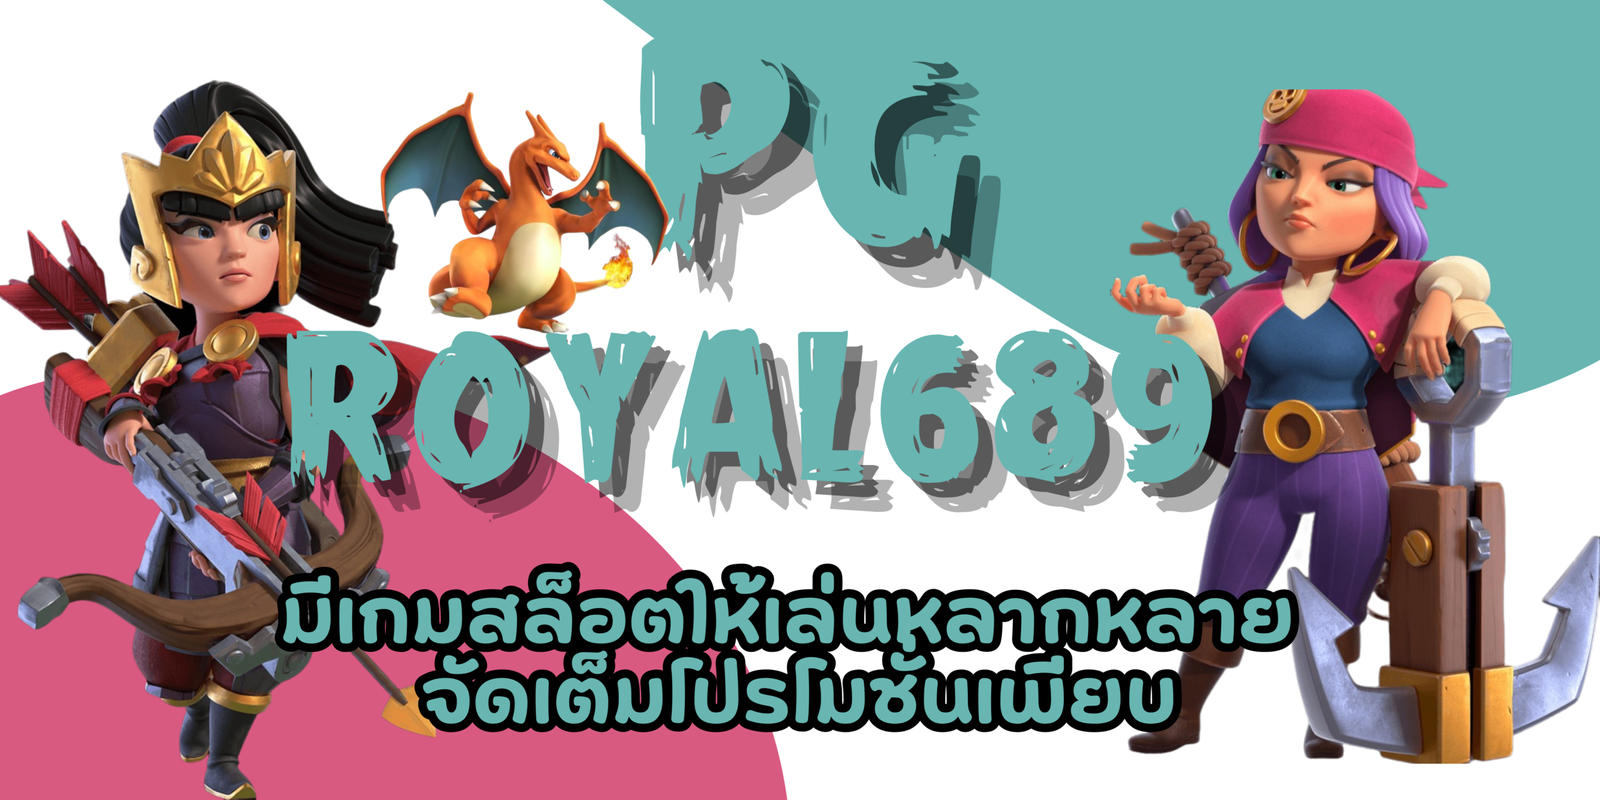 PG-royal689-จัดเต็มโปรโมชั่น